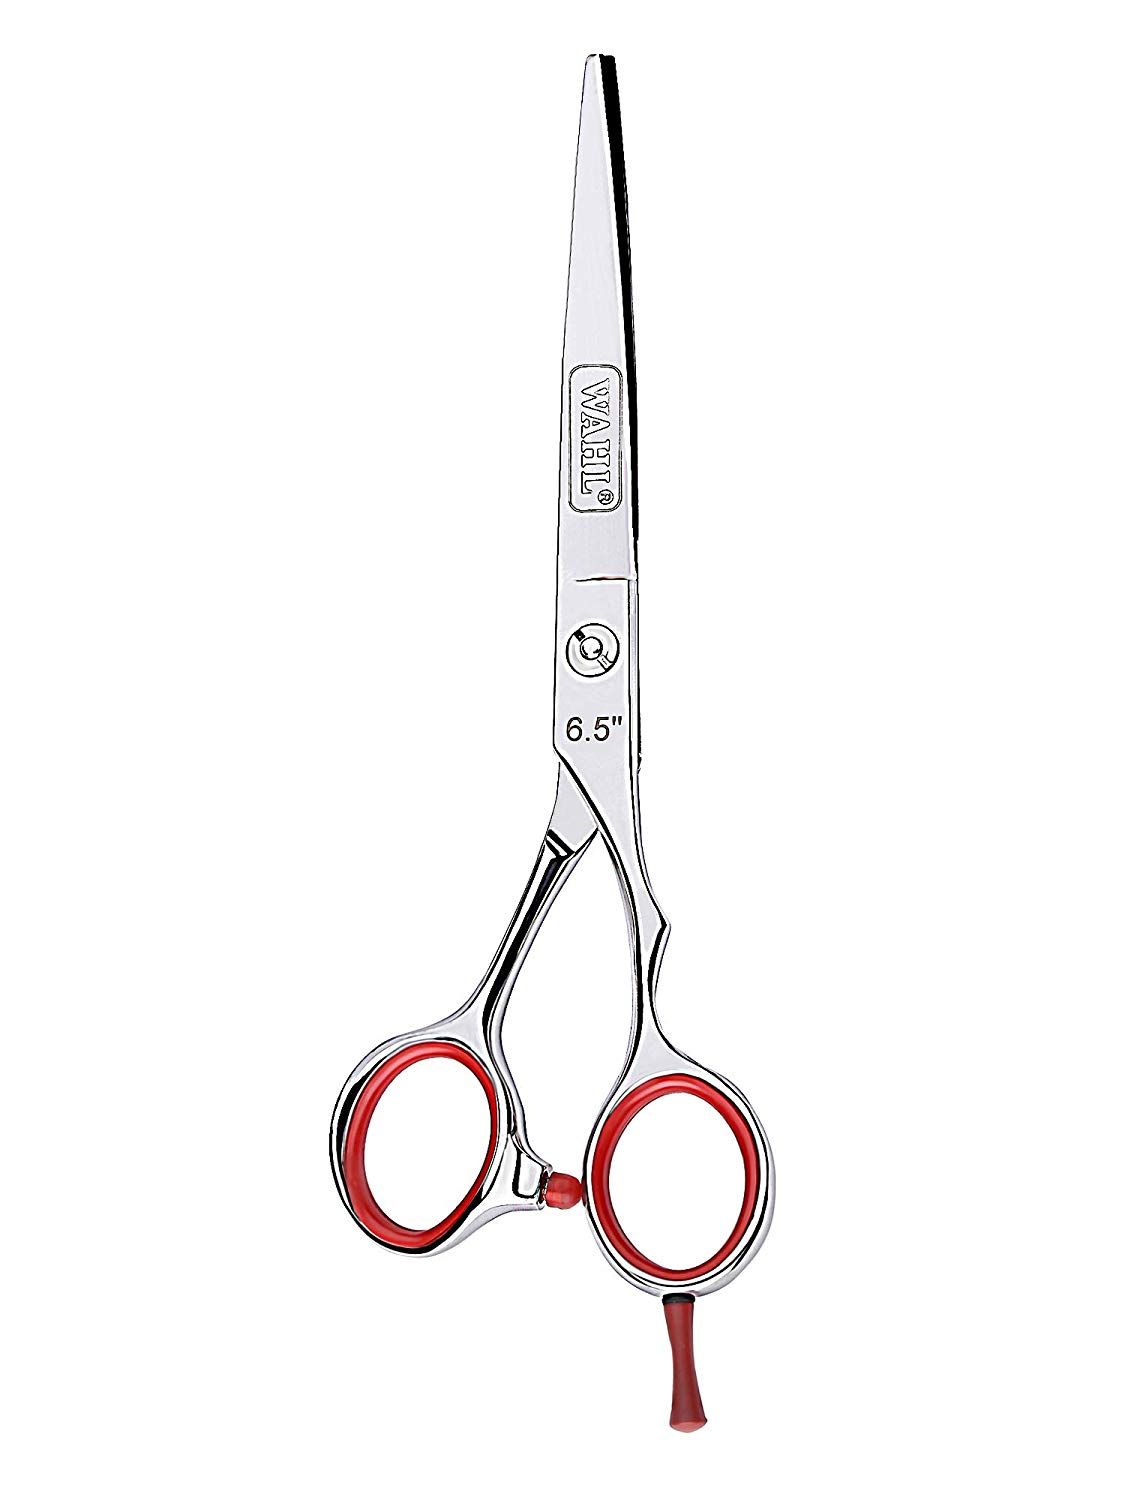 wahl scissors price